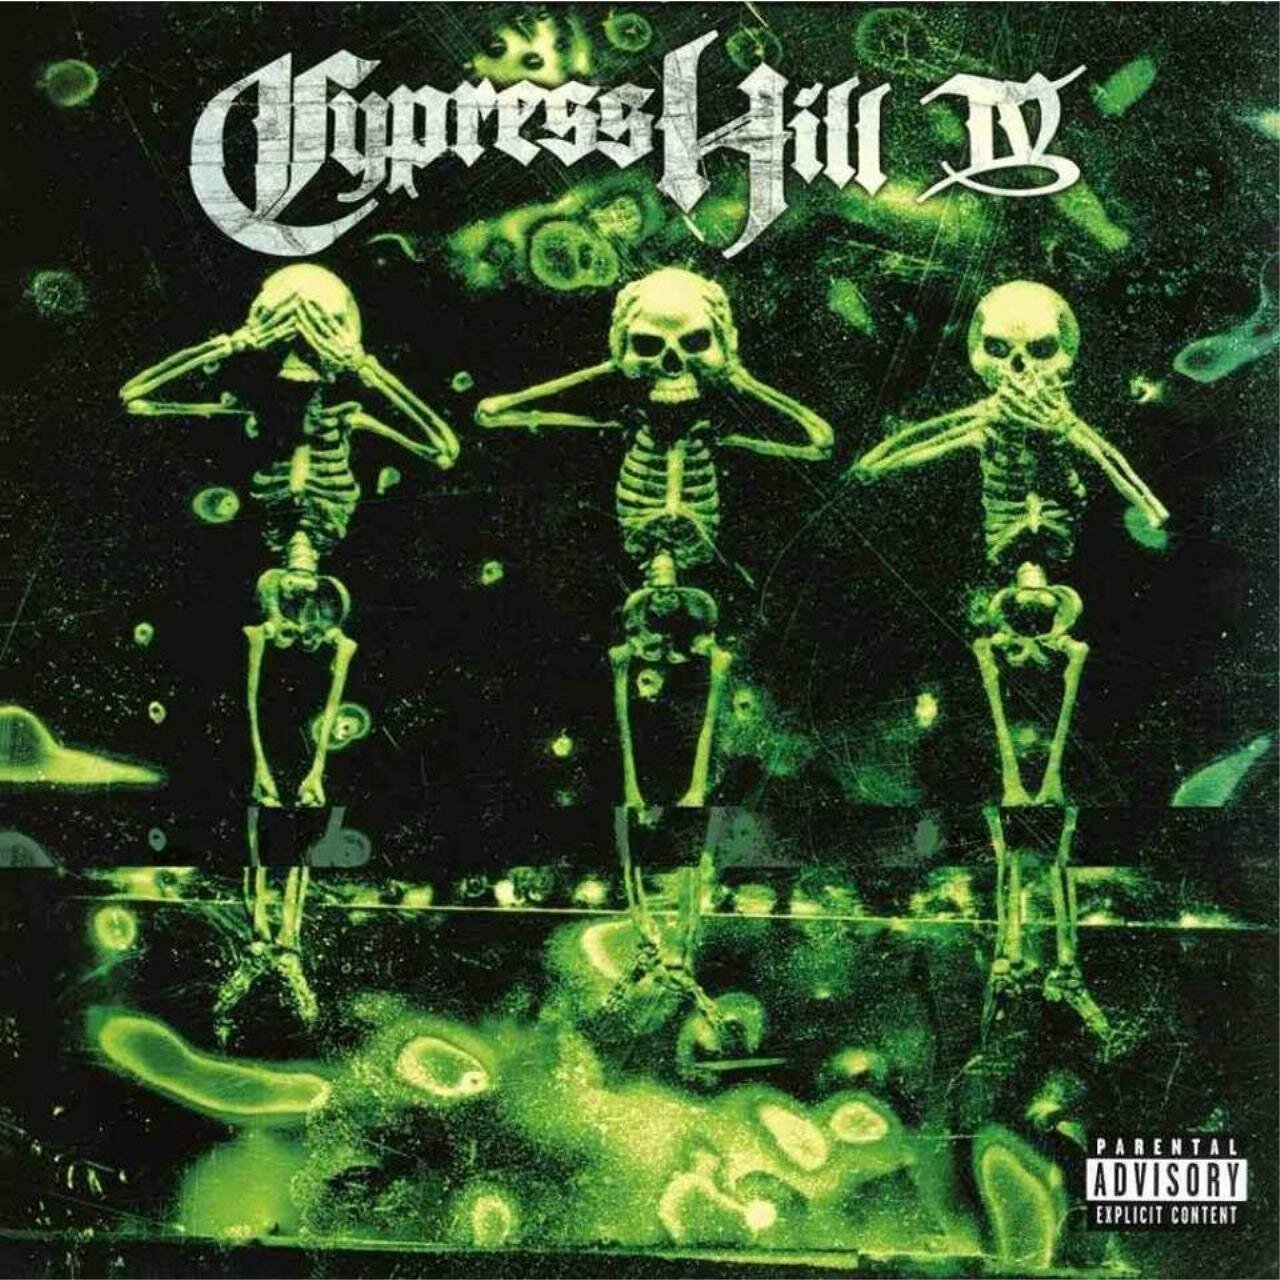 Виниловая пластинка Cypress Hill - IV